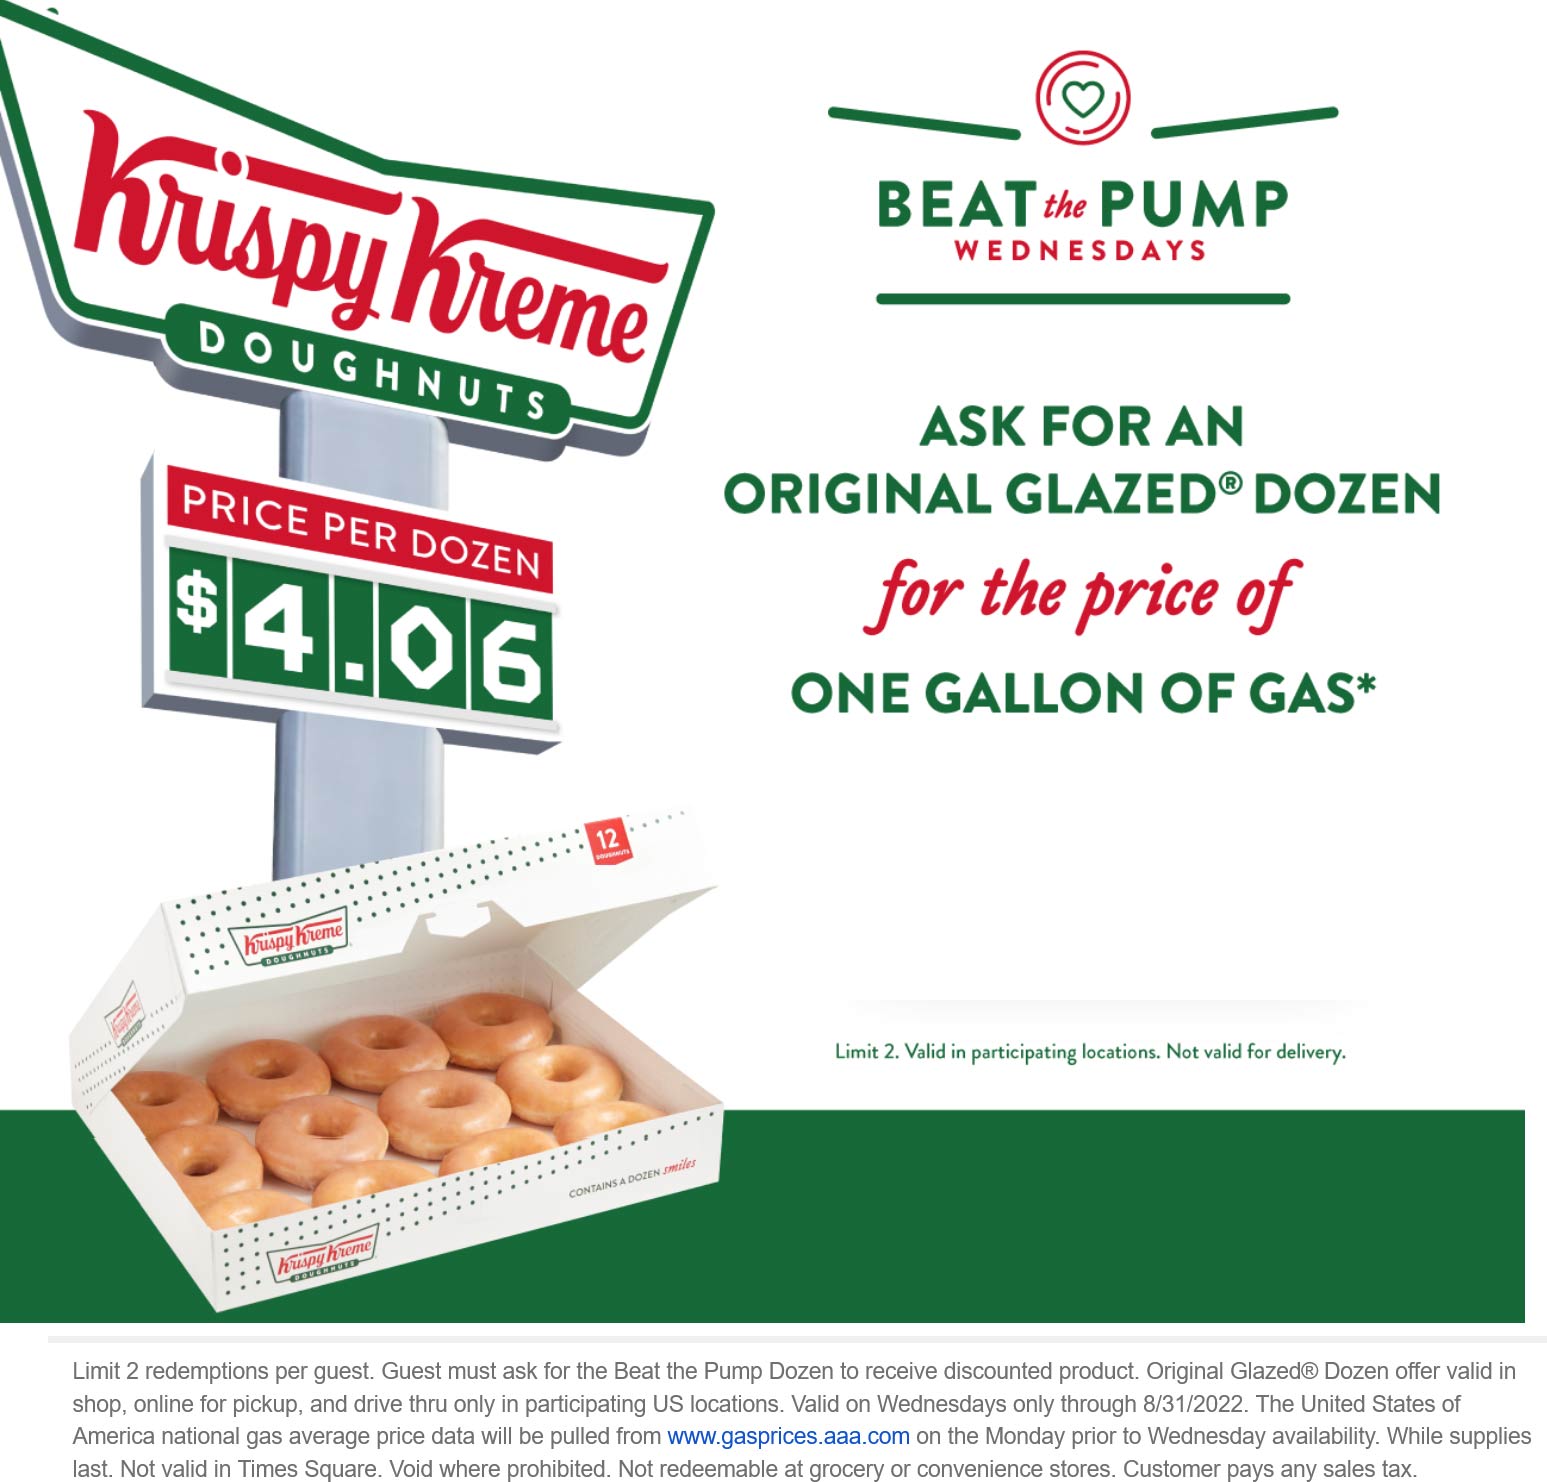 Krispy Kreme restaurants Coupon  $4.06 dozen doughnuts today at Krispy Kreme #krispykreme 